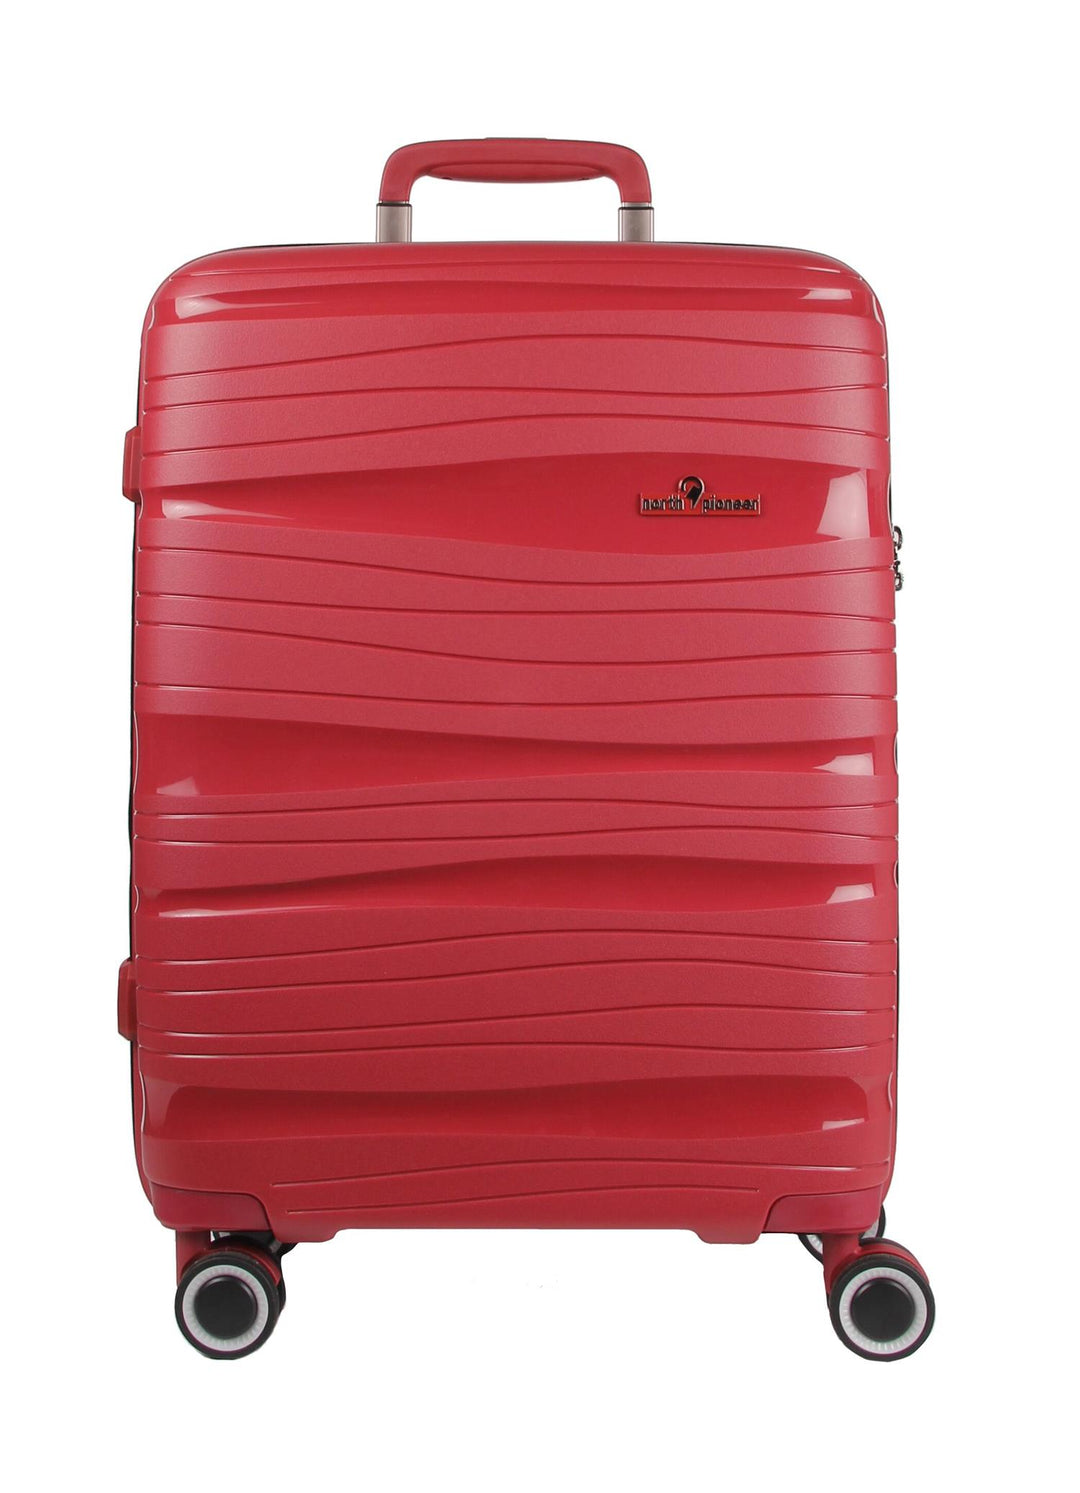 OSLO Suitcase 55